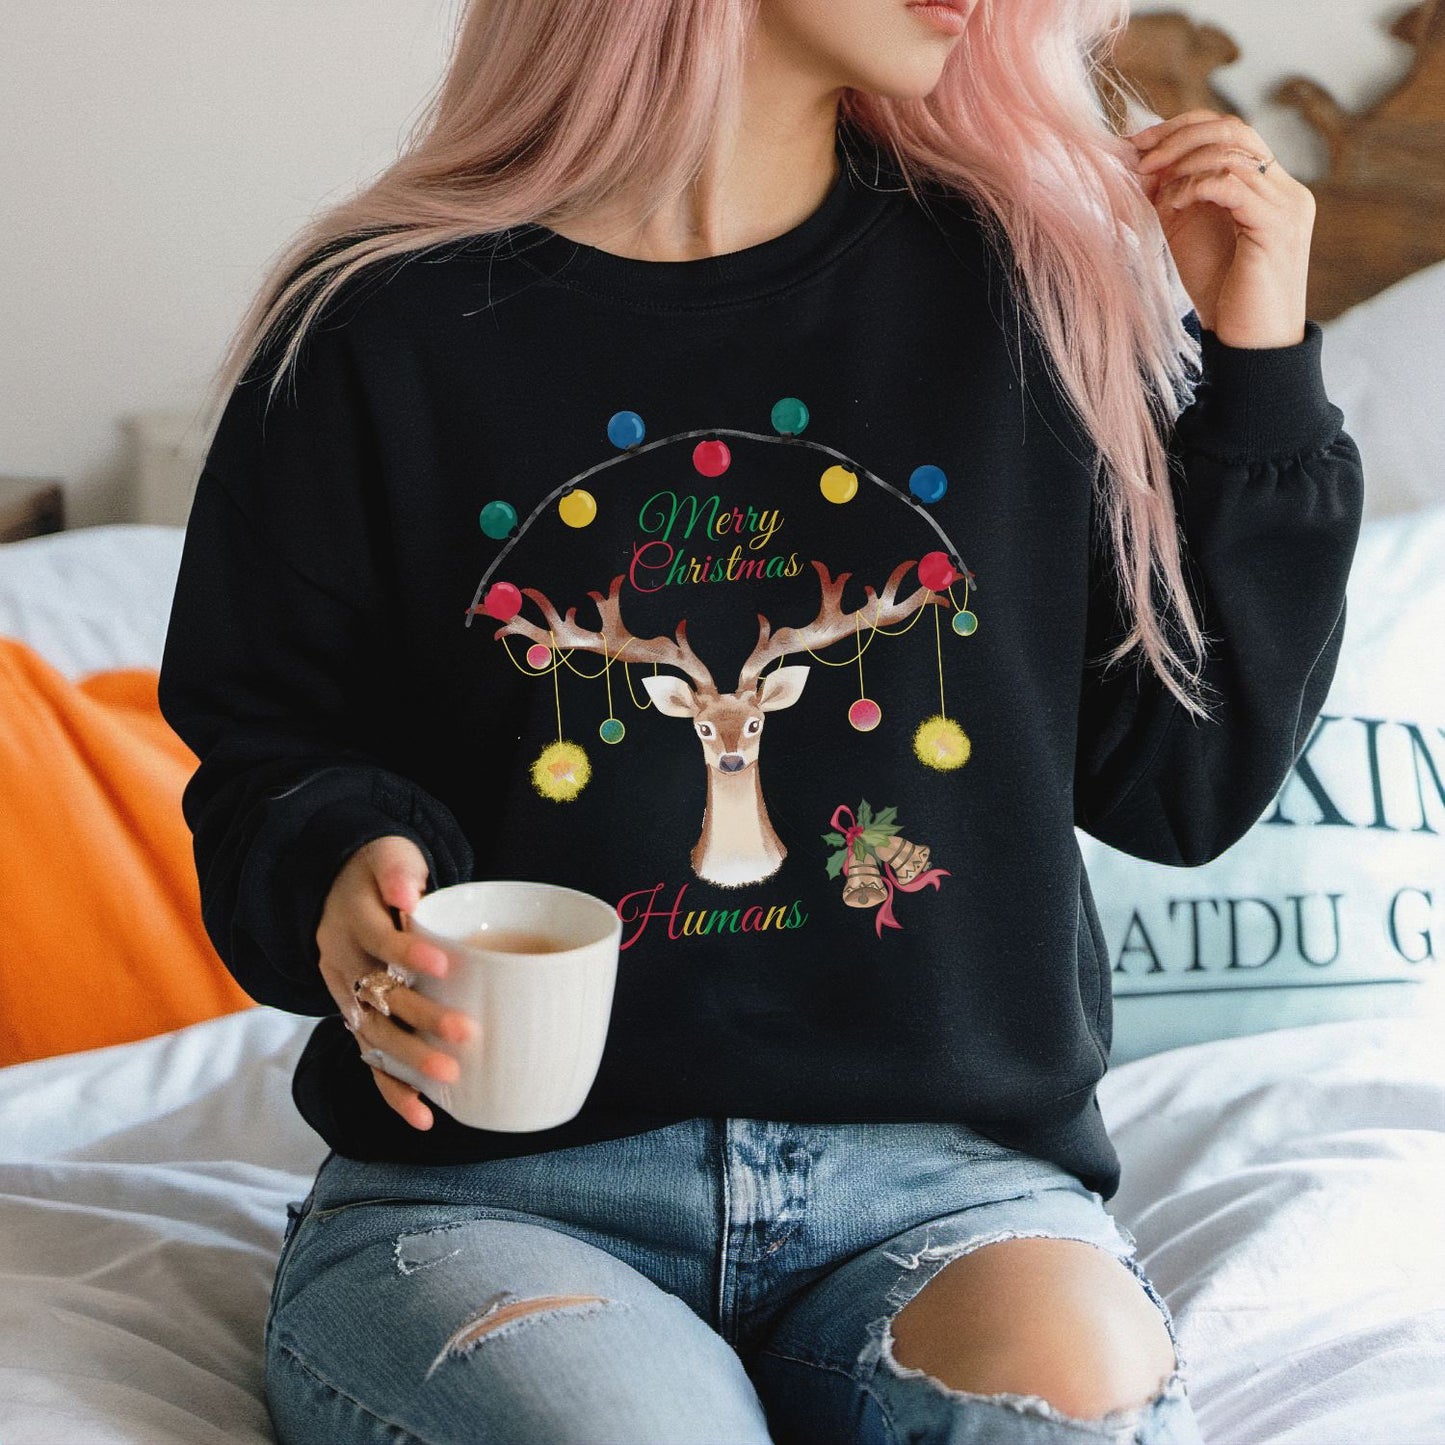 Merry Christmas Reindeer Sweatshirt - Christmas Crewneck for Festive Holiday Cheer | 'Merry Christmas Humans' Sweatshirt   